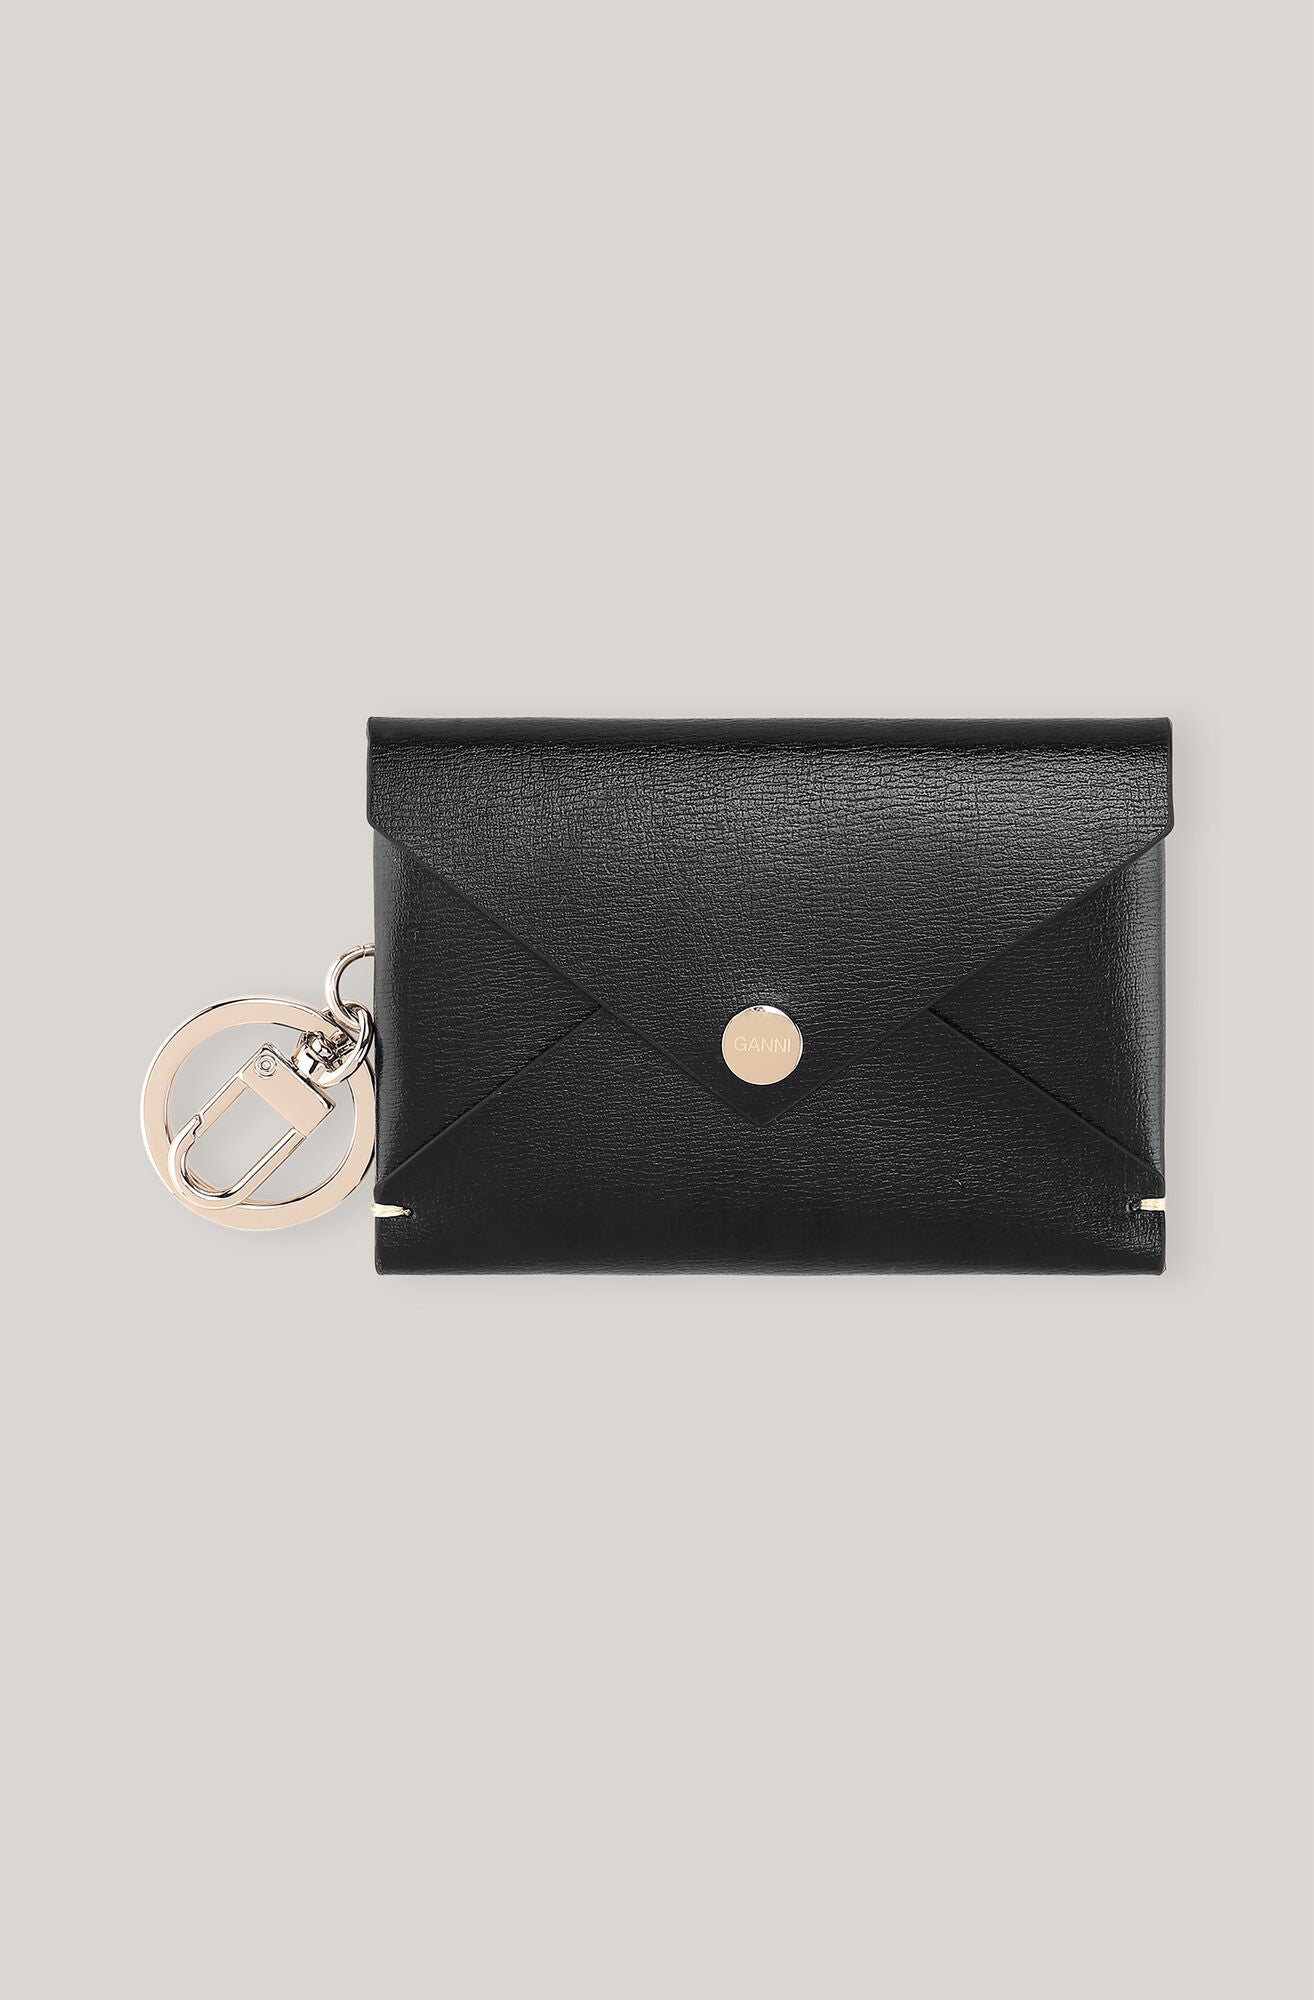 GANNI A4010 Keychain Wallet in Black